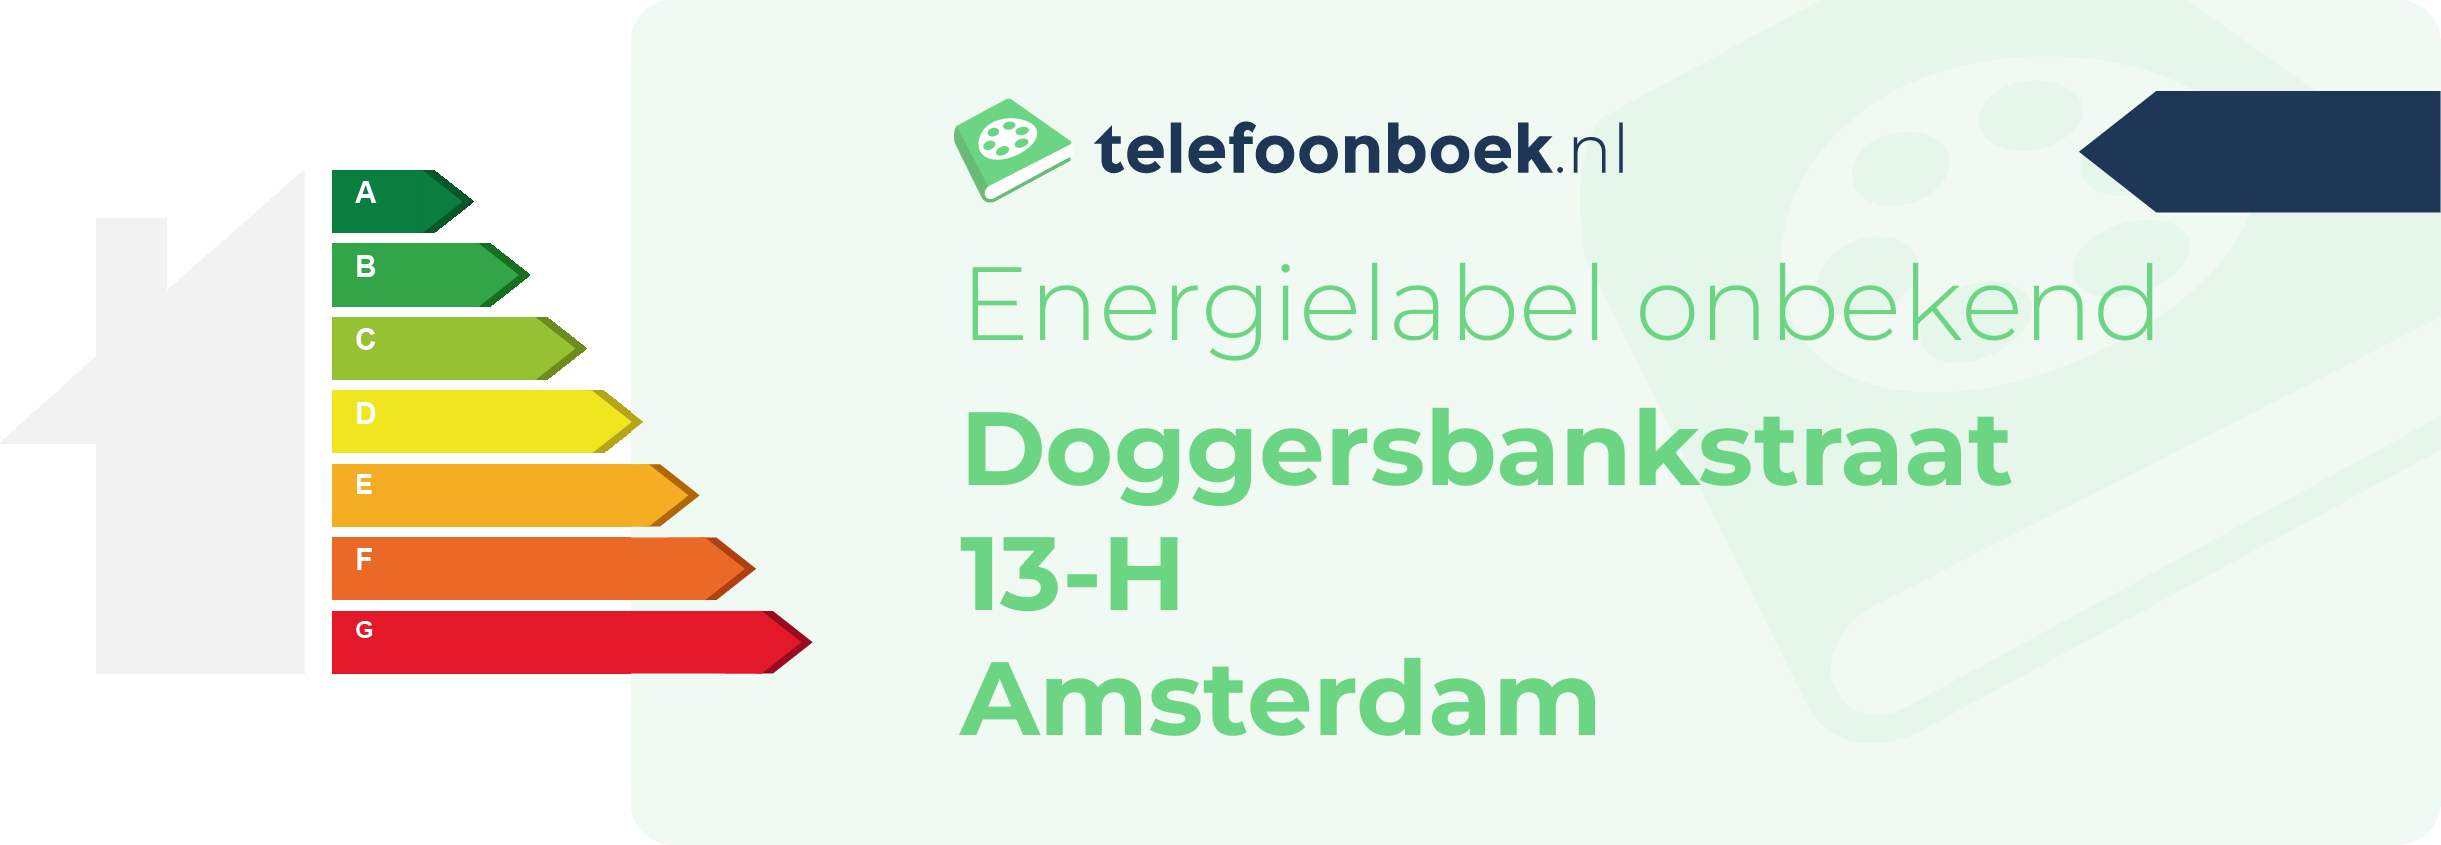 Energielabel Doggersbankstraat 13-H Amsterdam